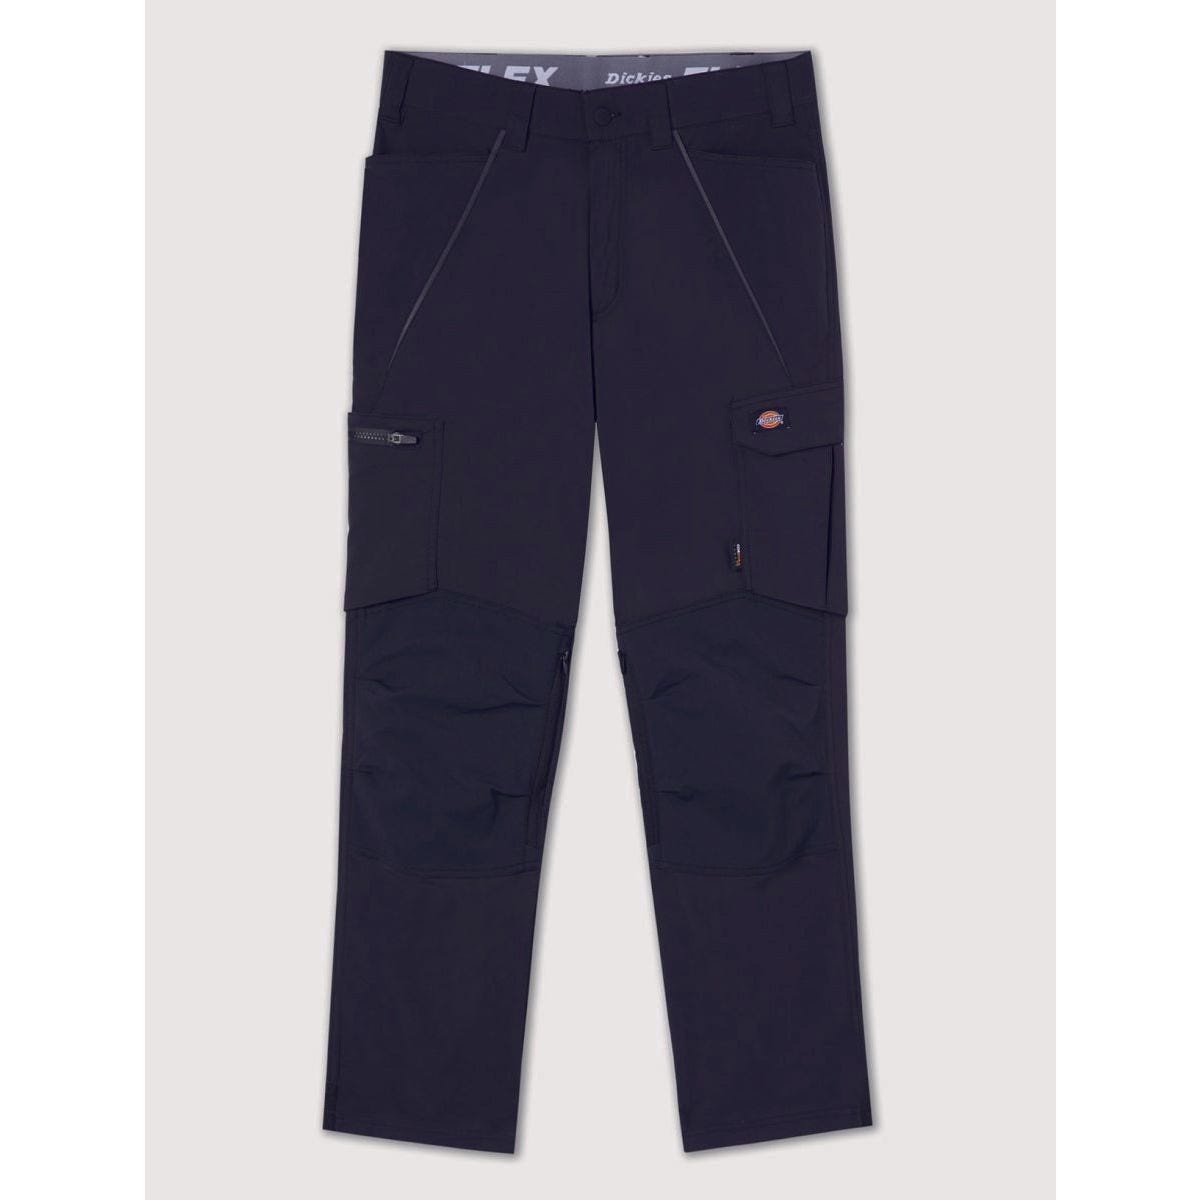 Pantalon léger Flex Noir - Dickies - Taille 52 5